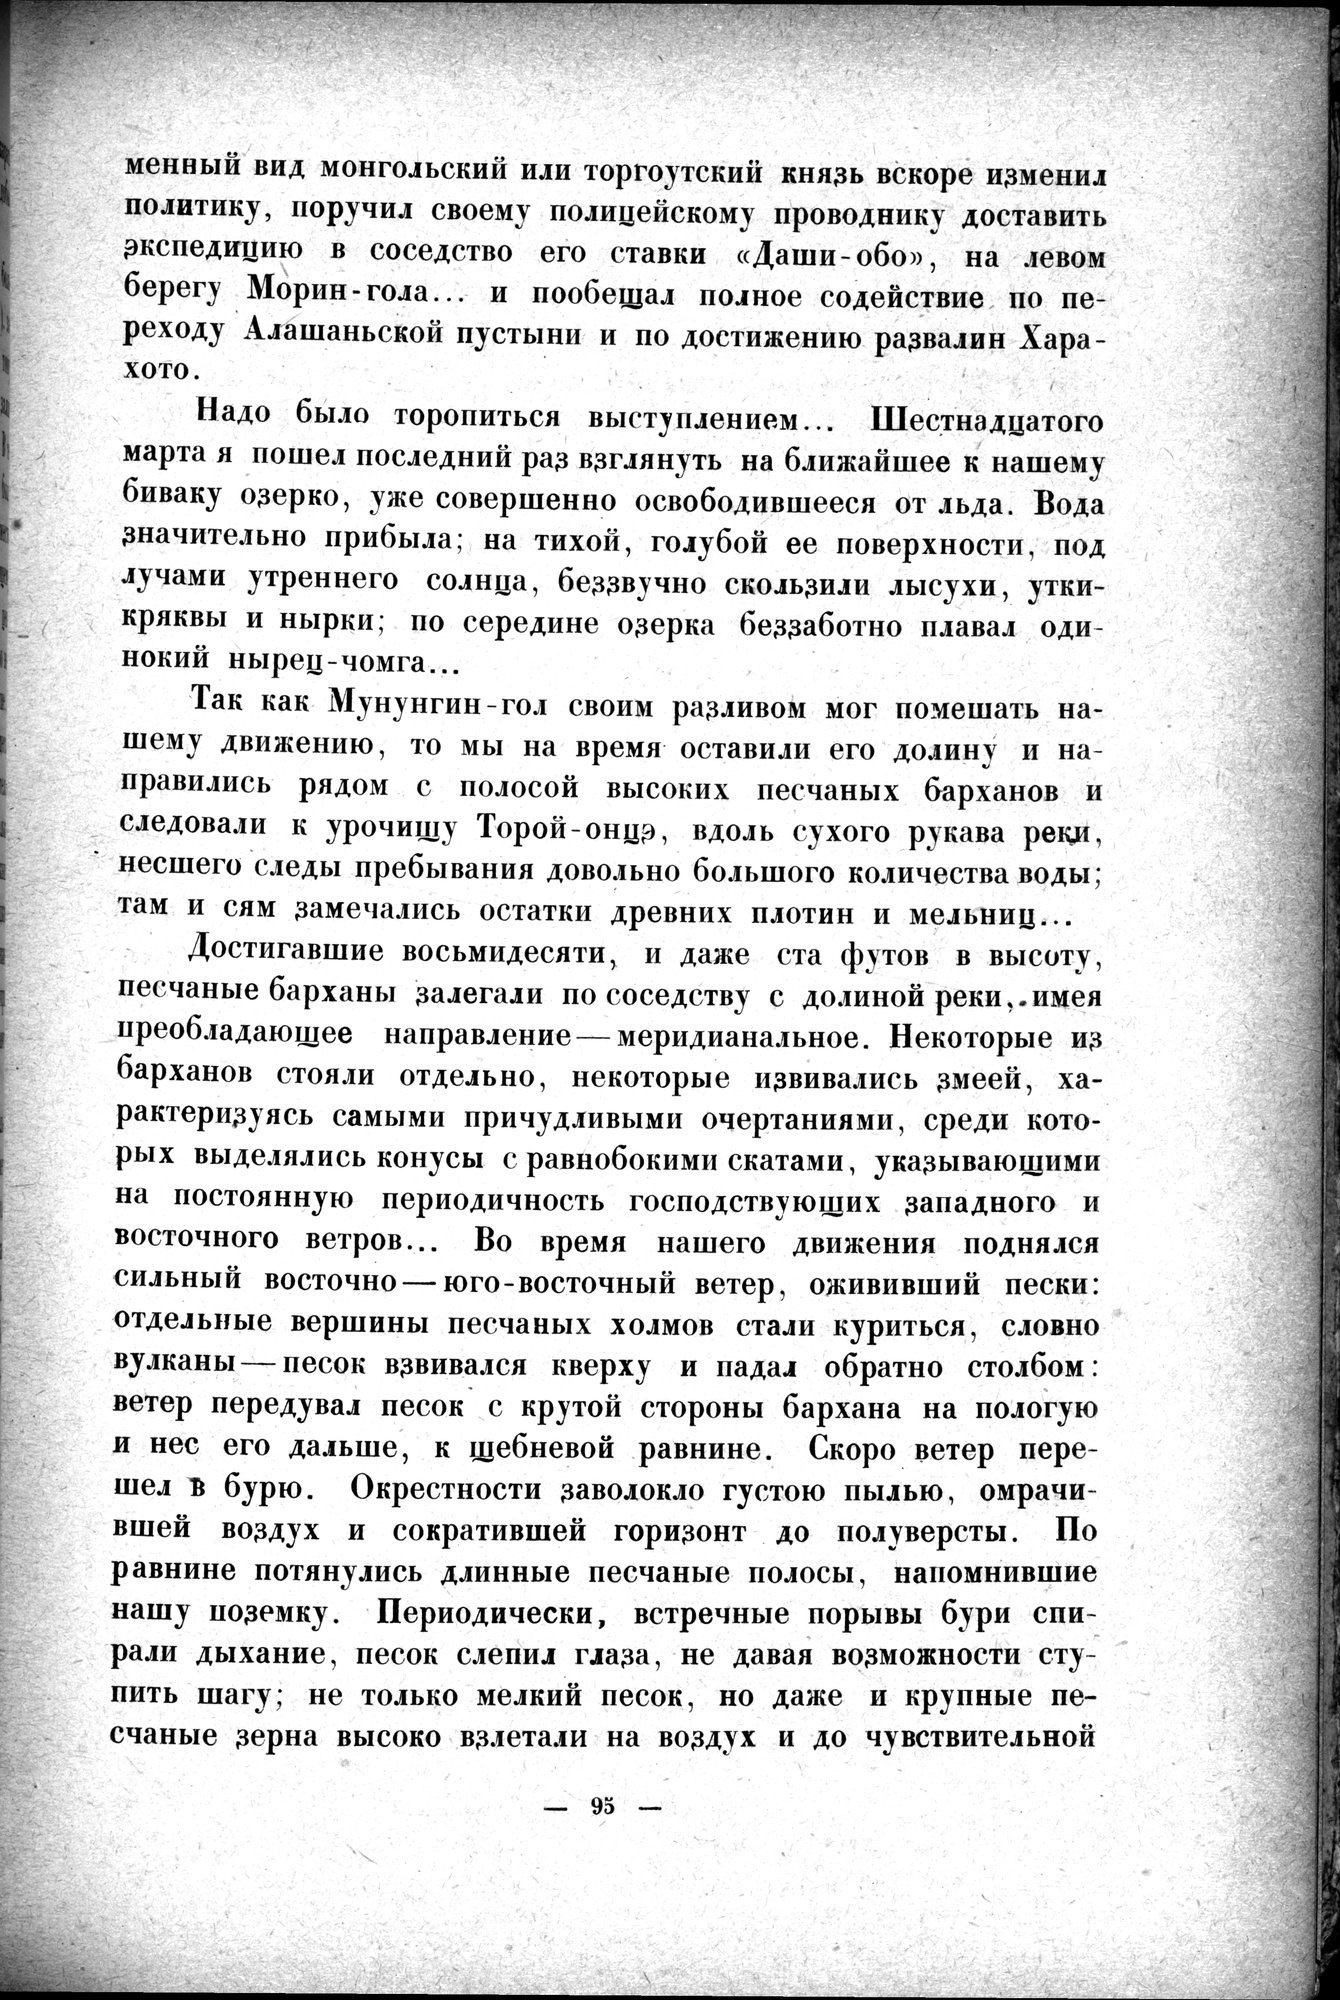 Mongoliya i Amdo i mertby gorod Khara-Khoto : vol.1 / Page 121 (Grayscale High Resolution Image)